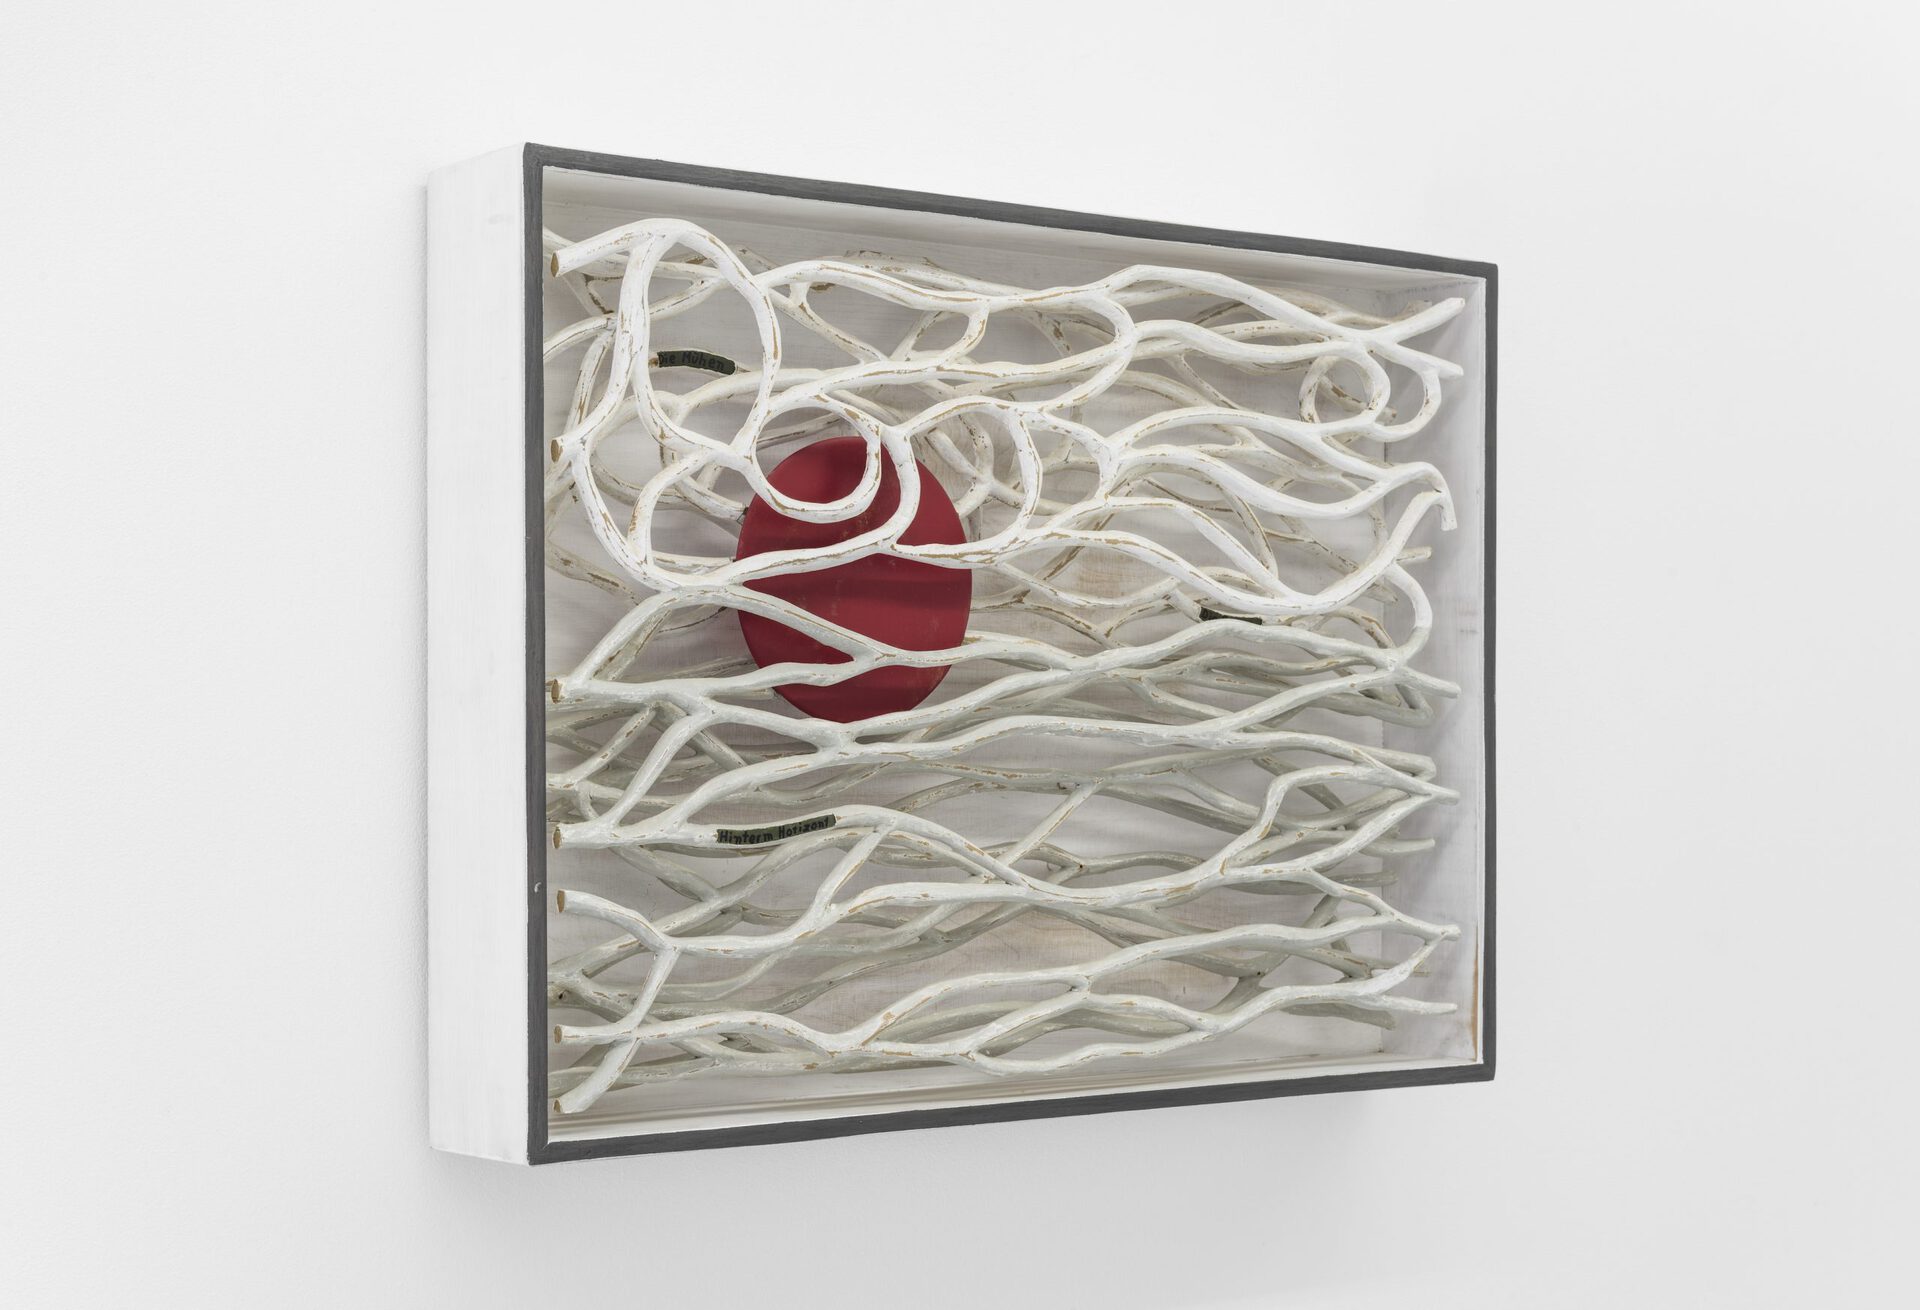 Tobias Hauser, Hinterm Horizont, MDF, wood, caseint paint, 55 x 75 x 15 cm, 2018.